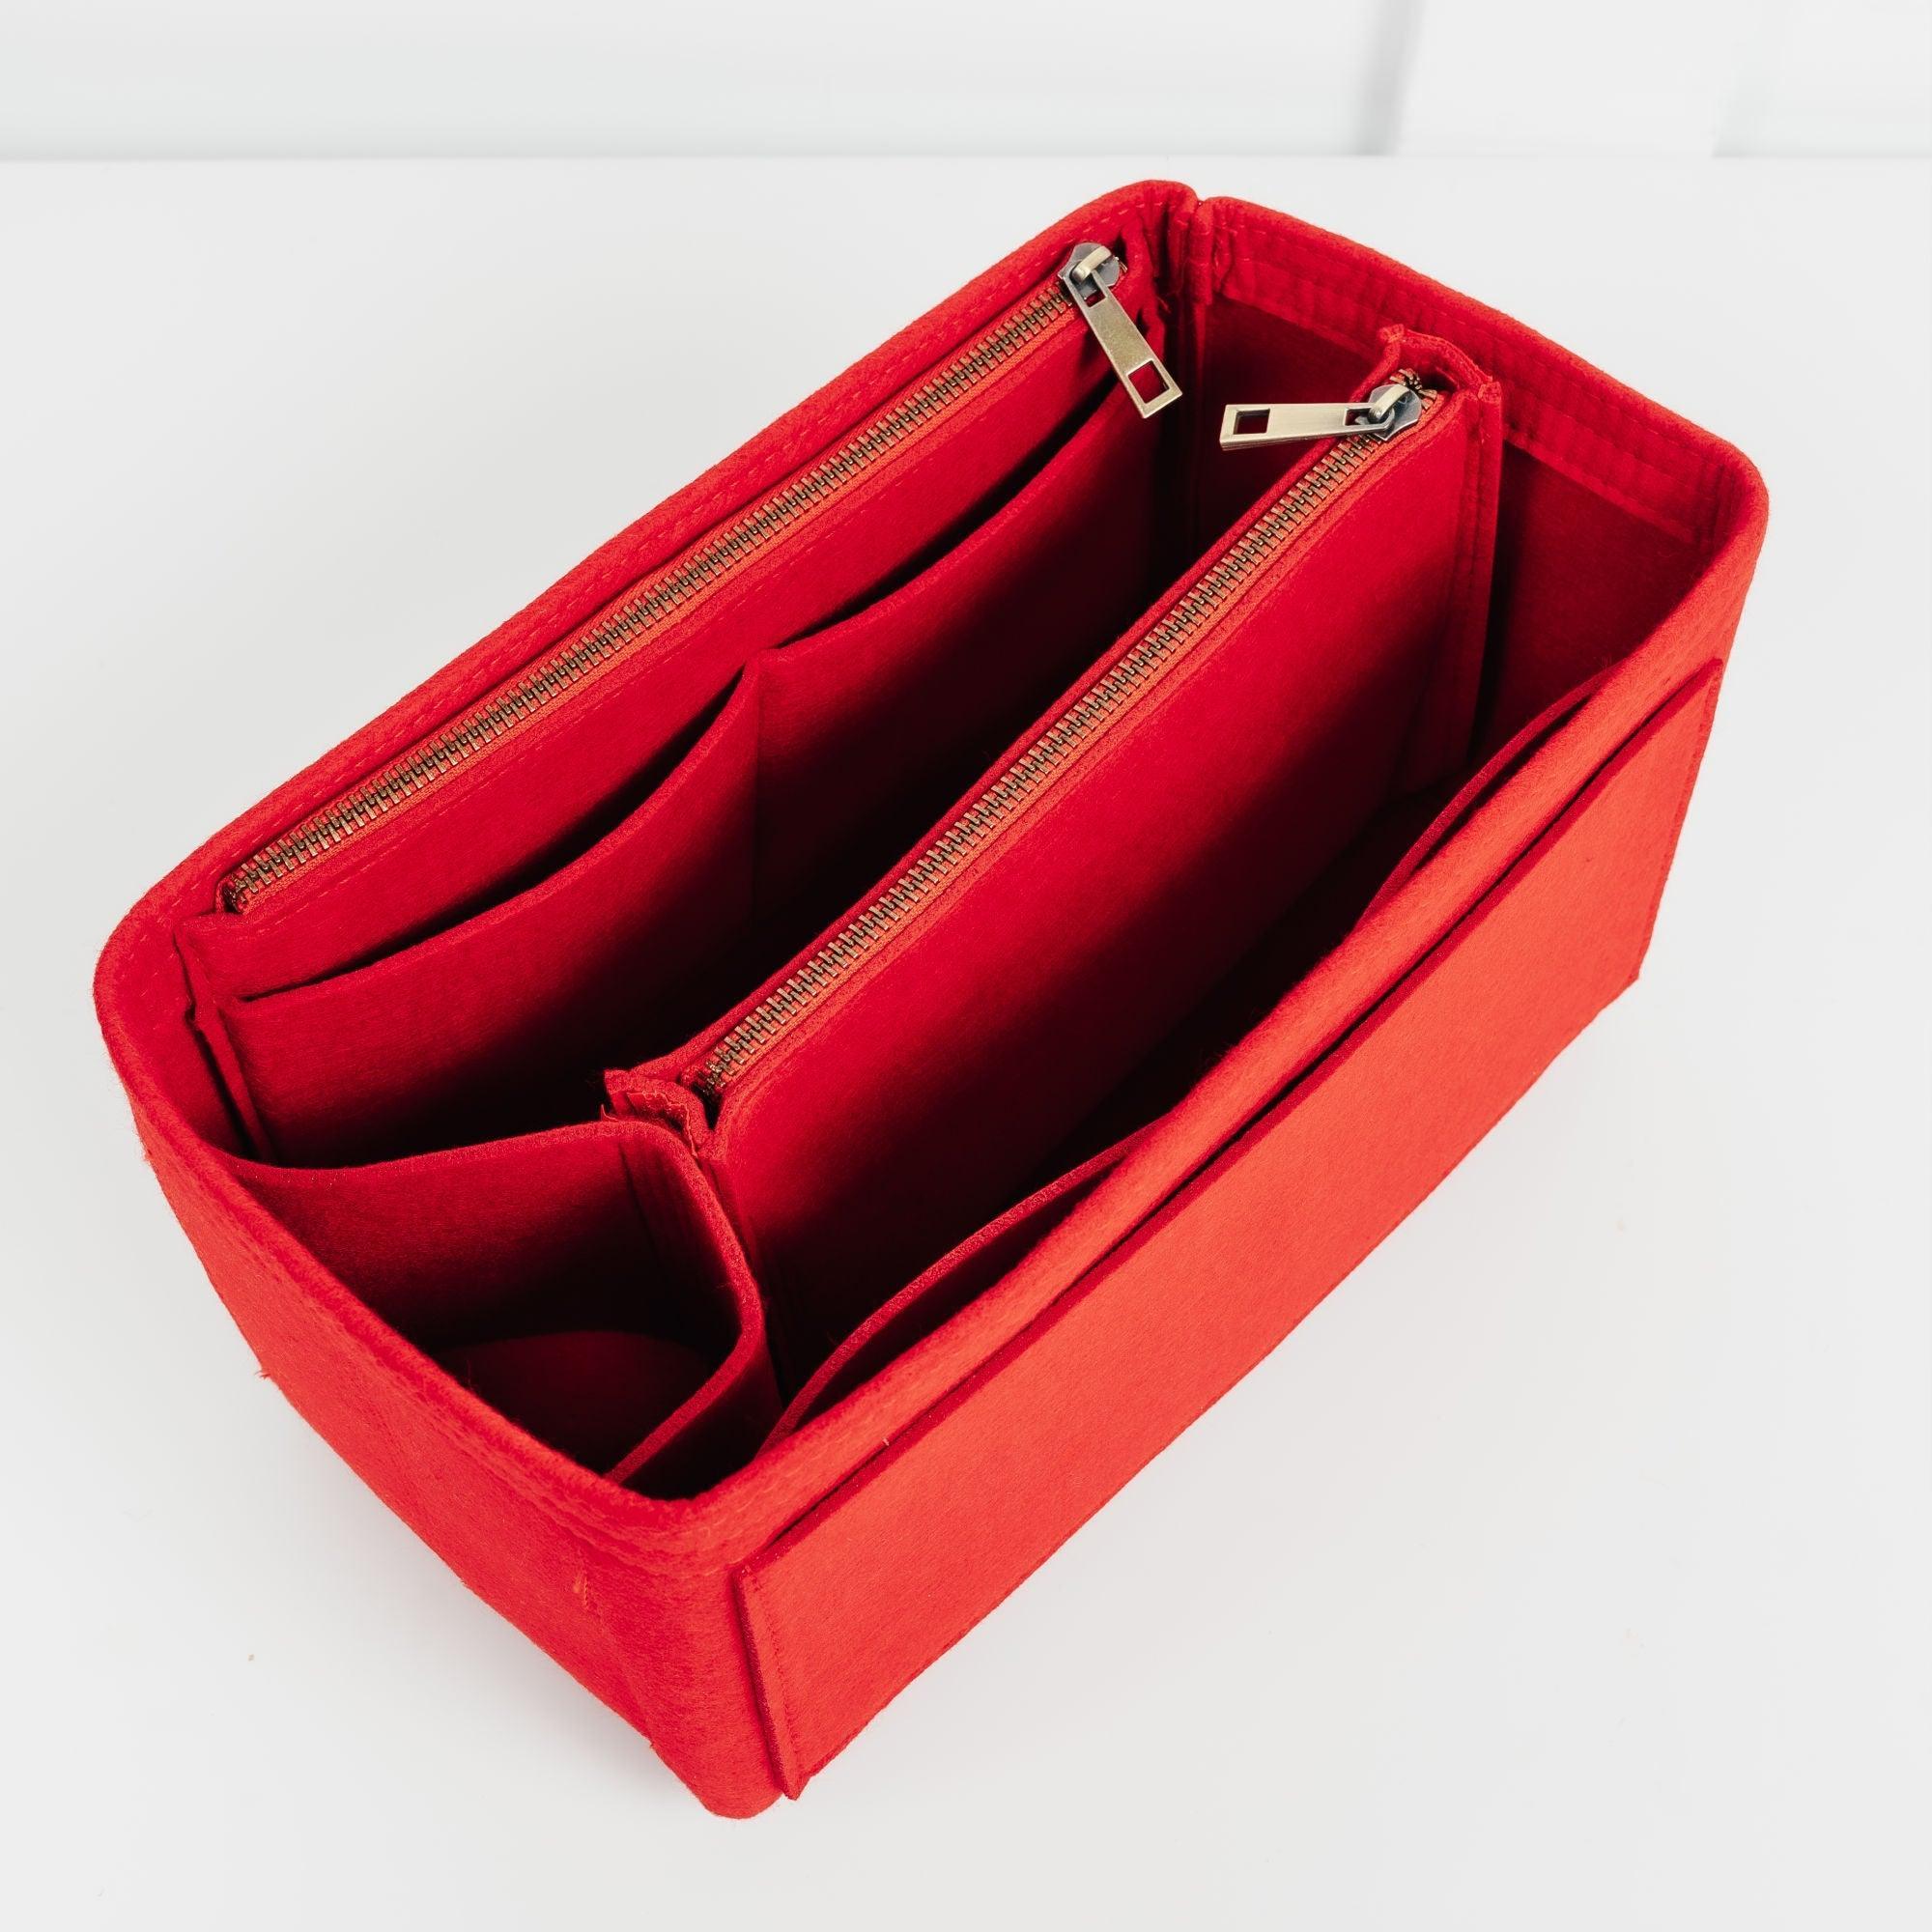 KESOIL Purse Organizer Insert for Handbags Tote Bag on The Go GM 40 Handbags Tote Bag Felt Insert with Zipper Bag (Red, GM, XL)